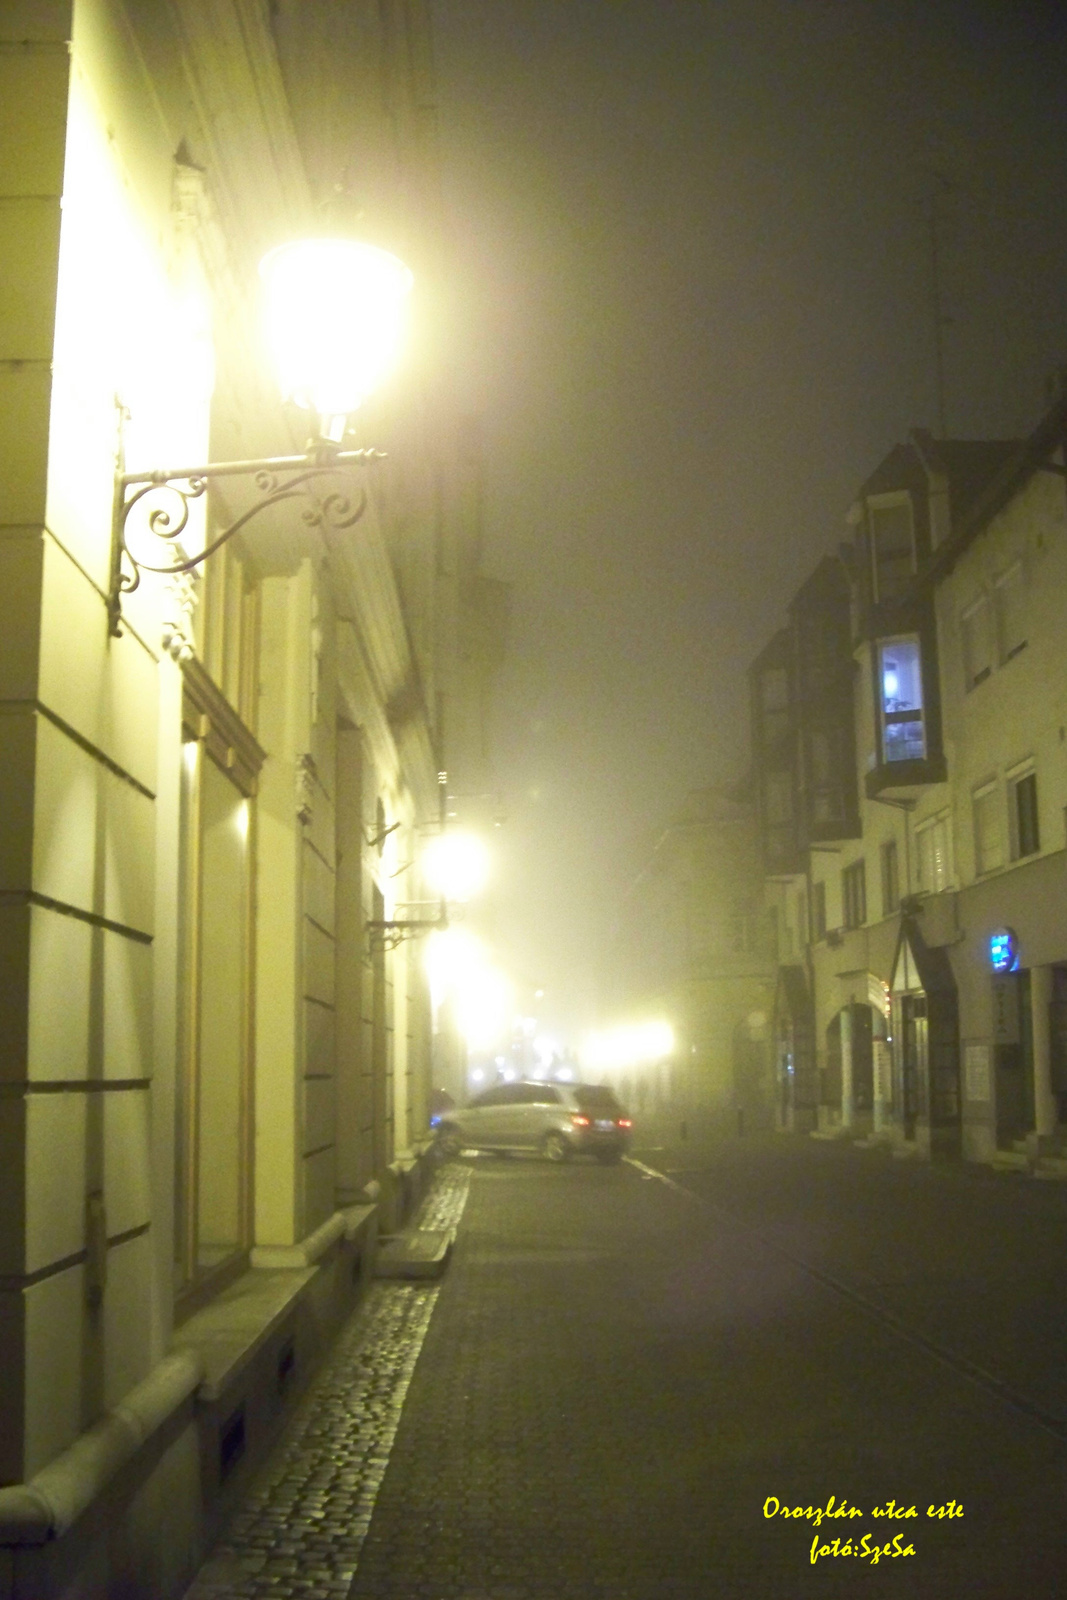 Oroszlán utca este